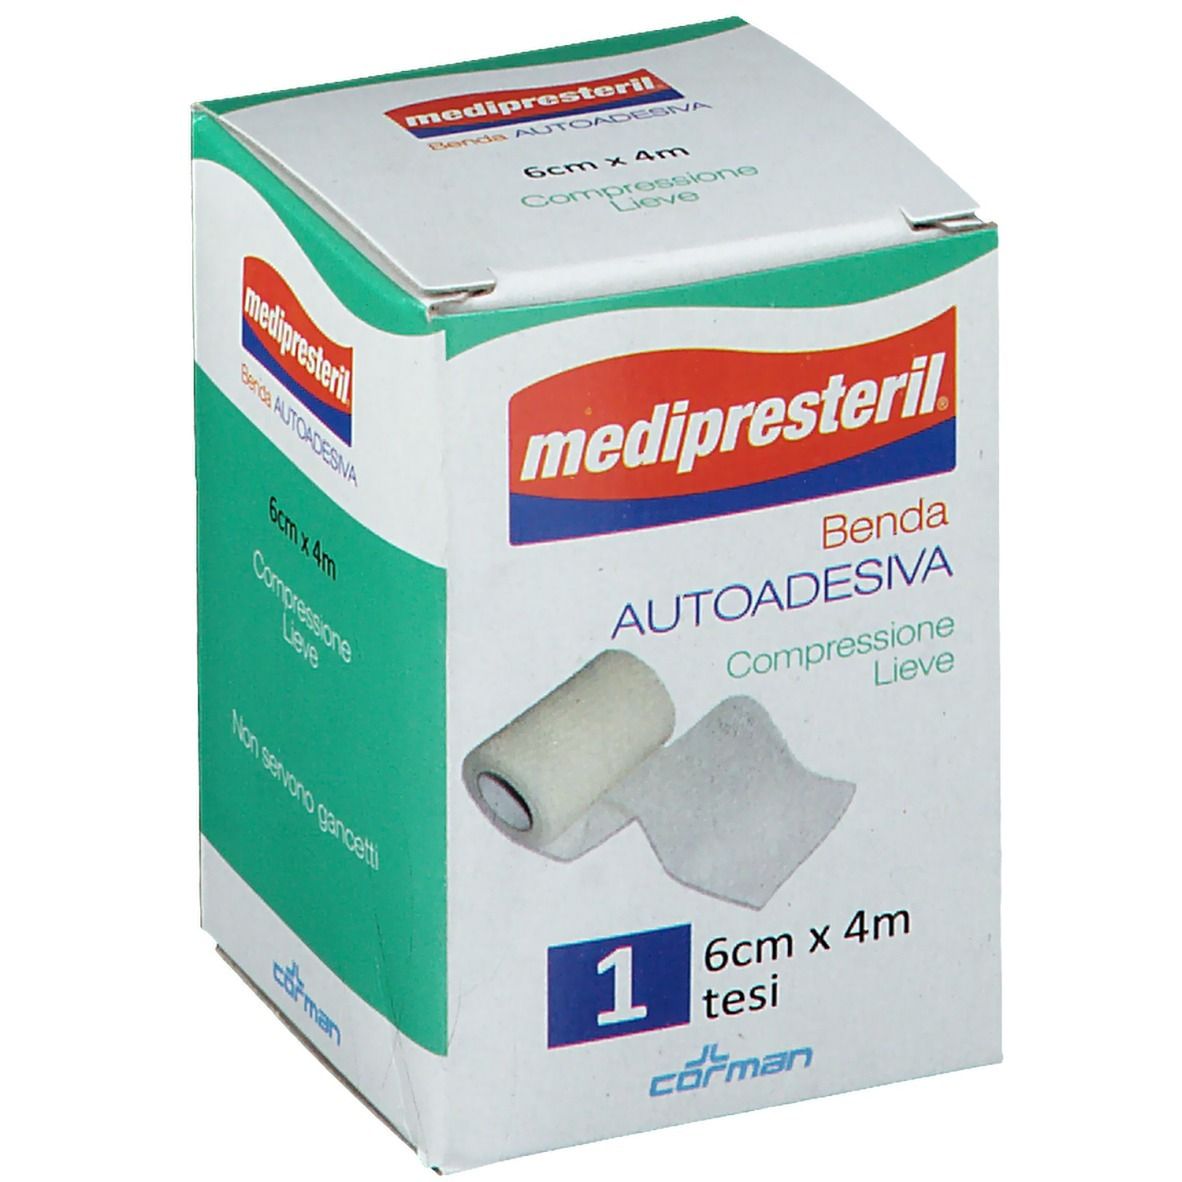 MediPresteril® Benda Autoadesiva Compressione Lieve 6 x 4 m 1 pz